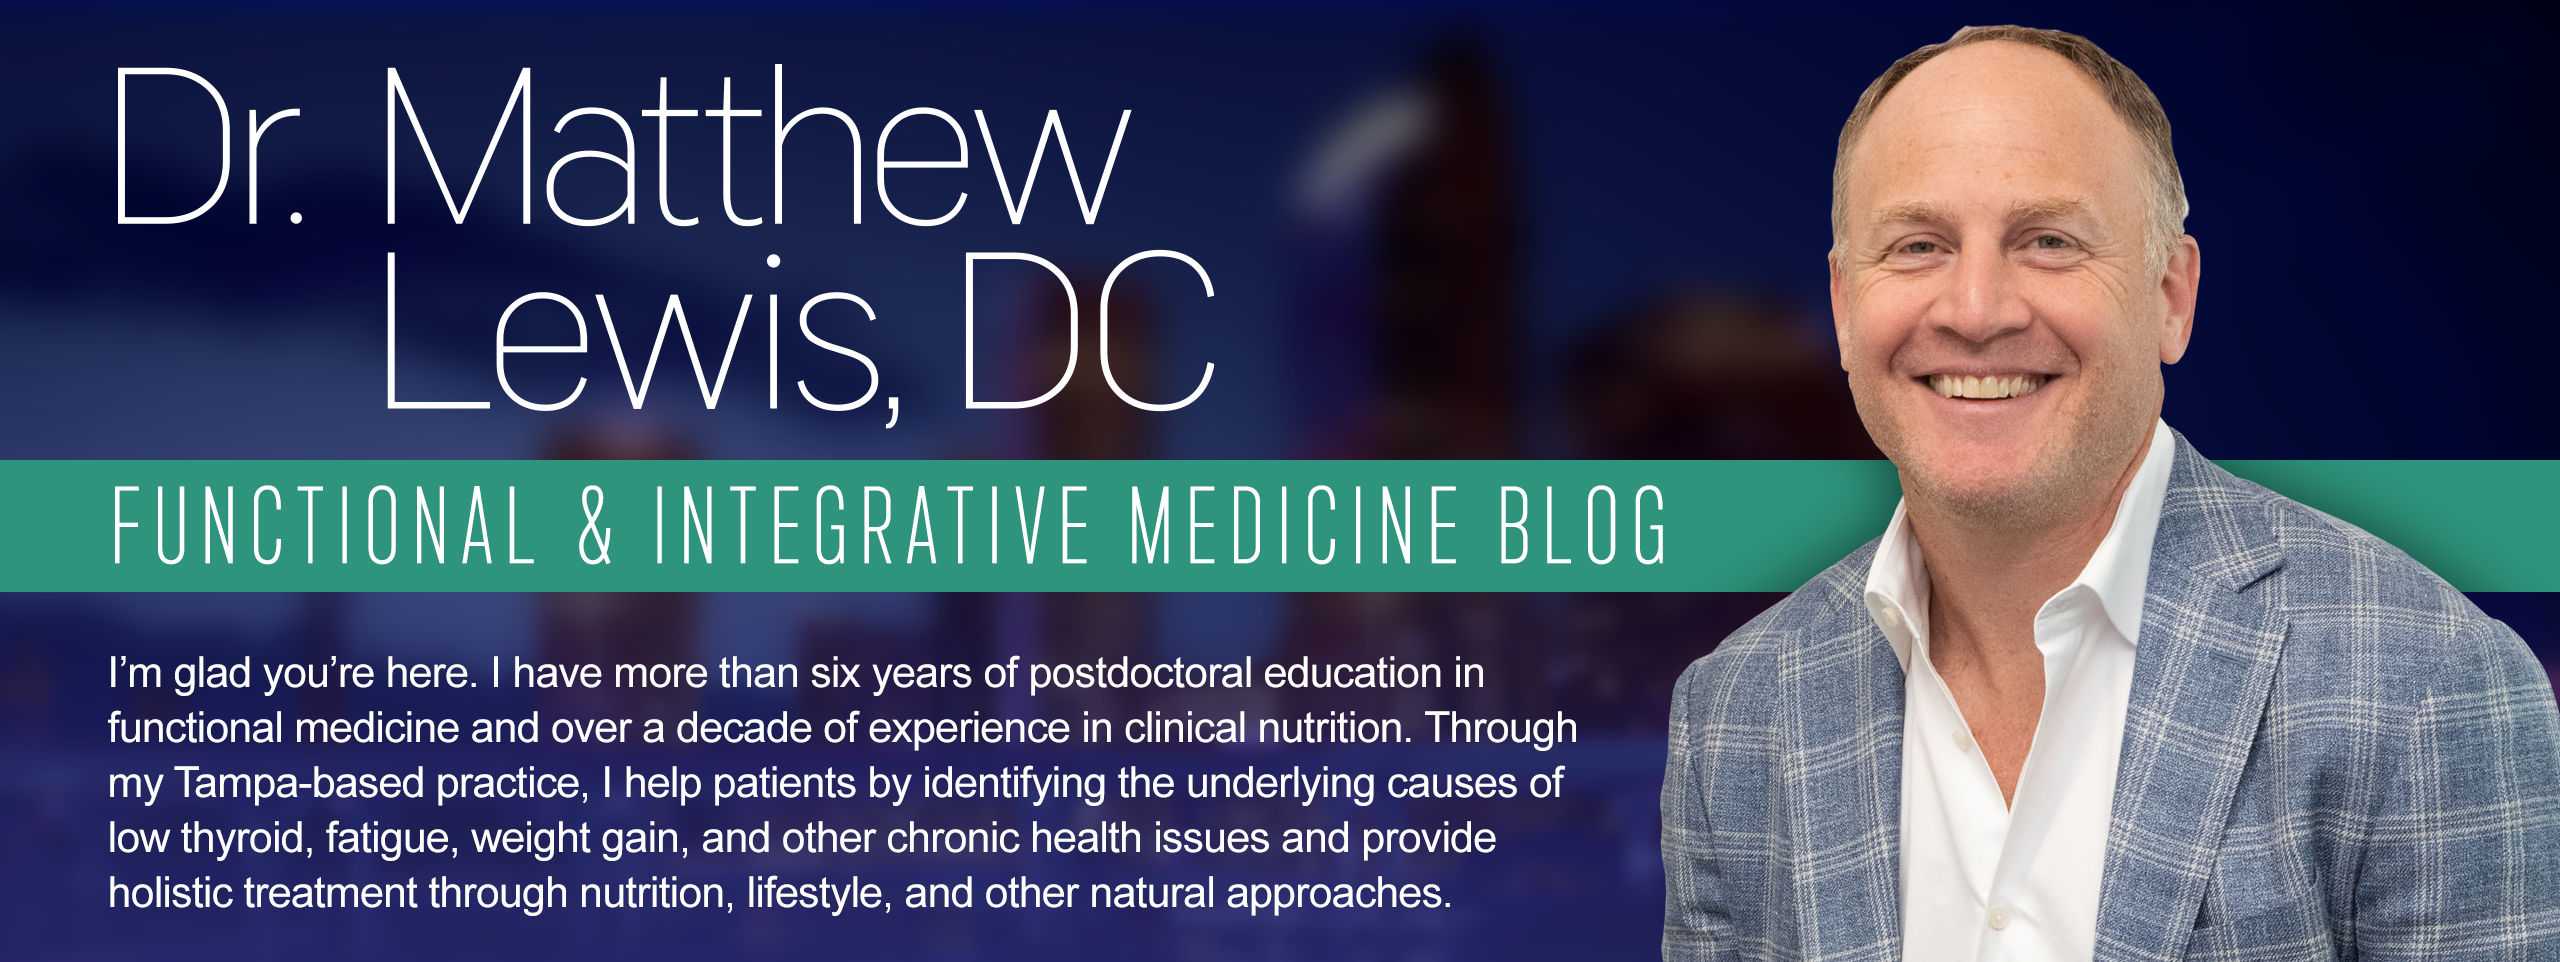 Dr. Matthew Lewis, DC — Functional & Integrative Medicine Blog